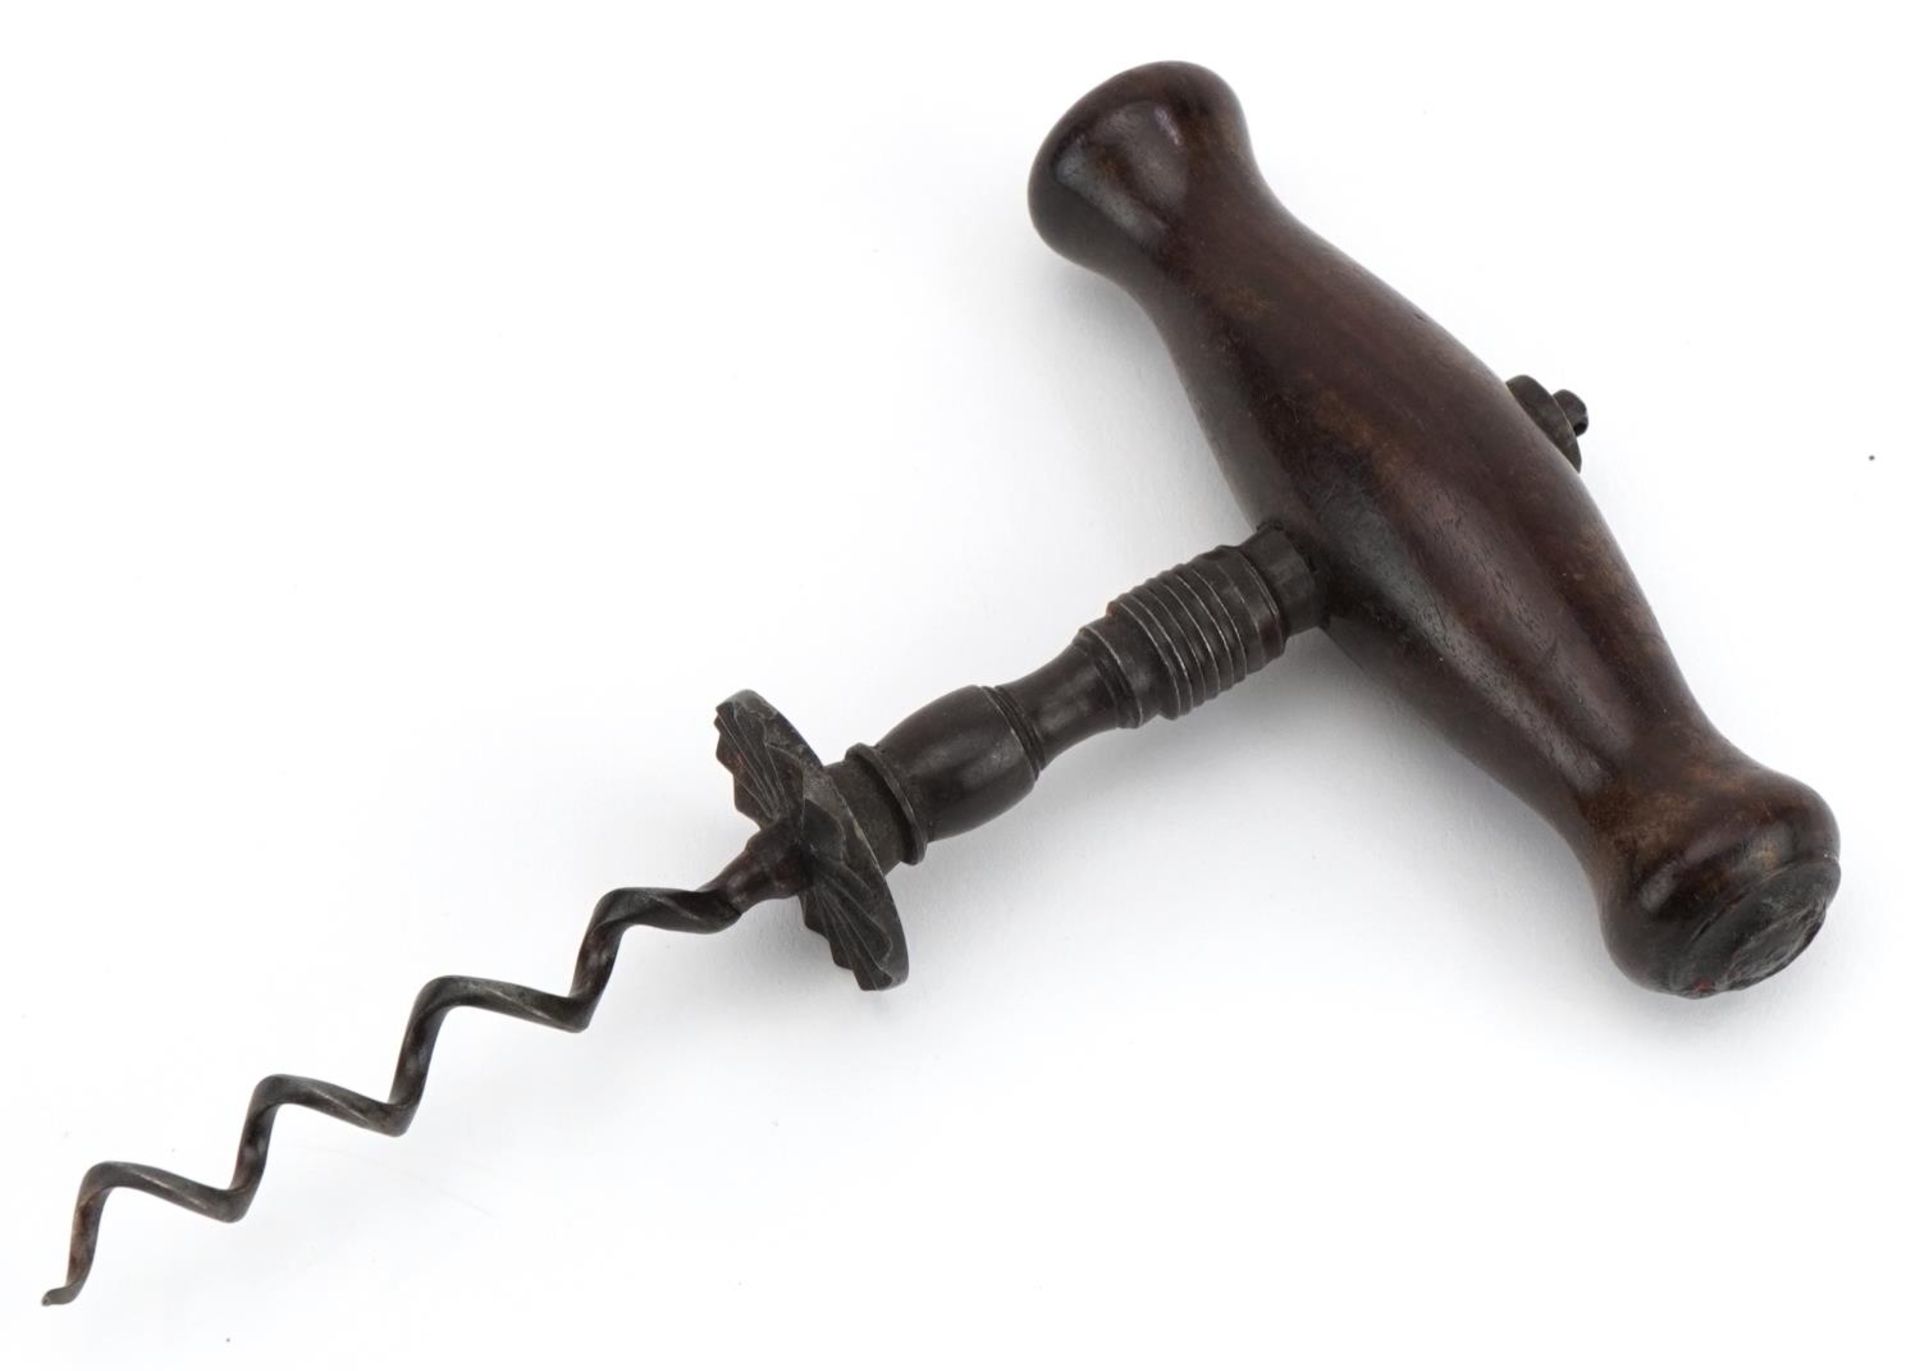 Antique steel corkscrew with hardwood handle - Image 2 of 4